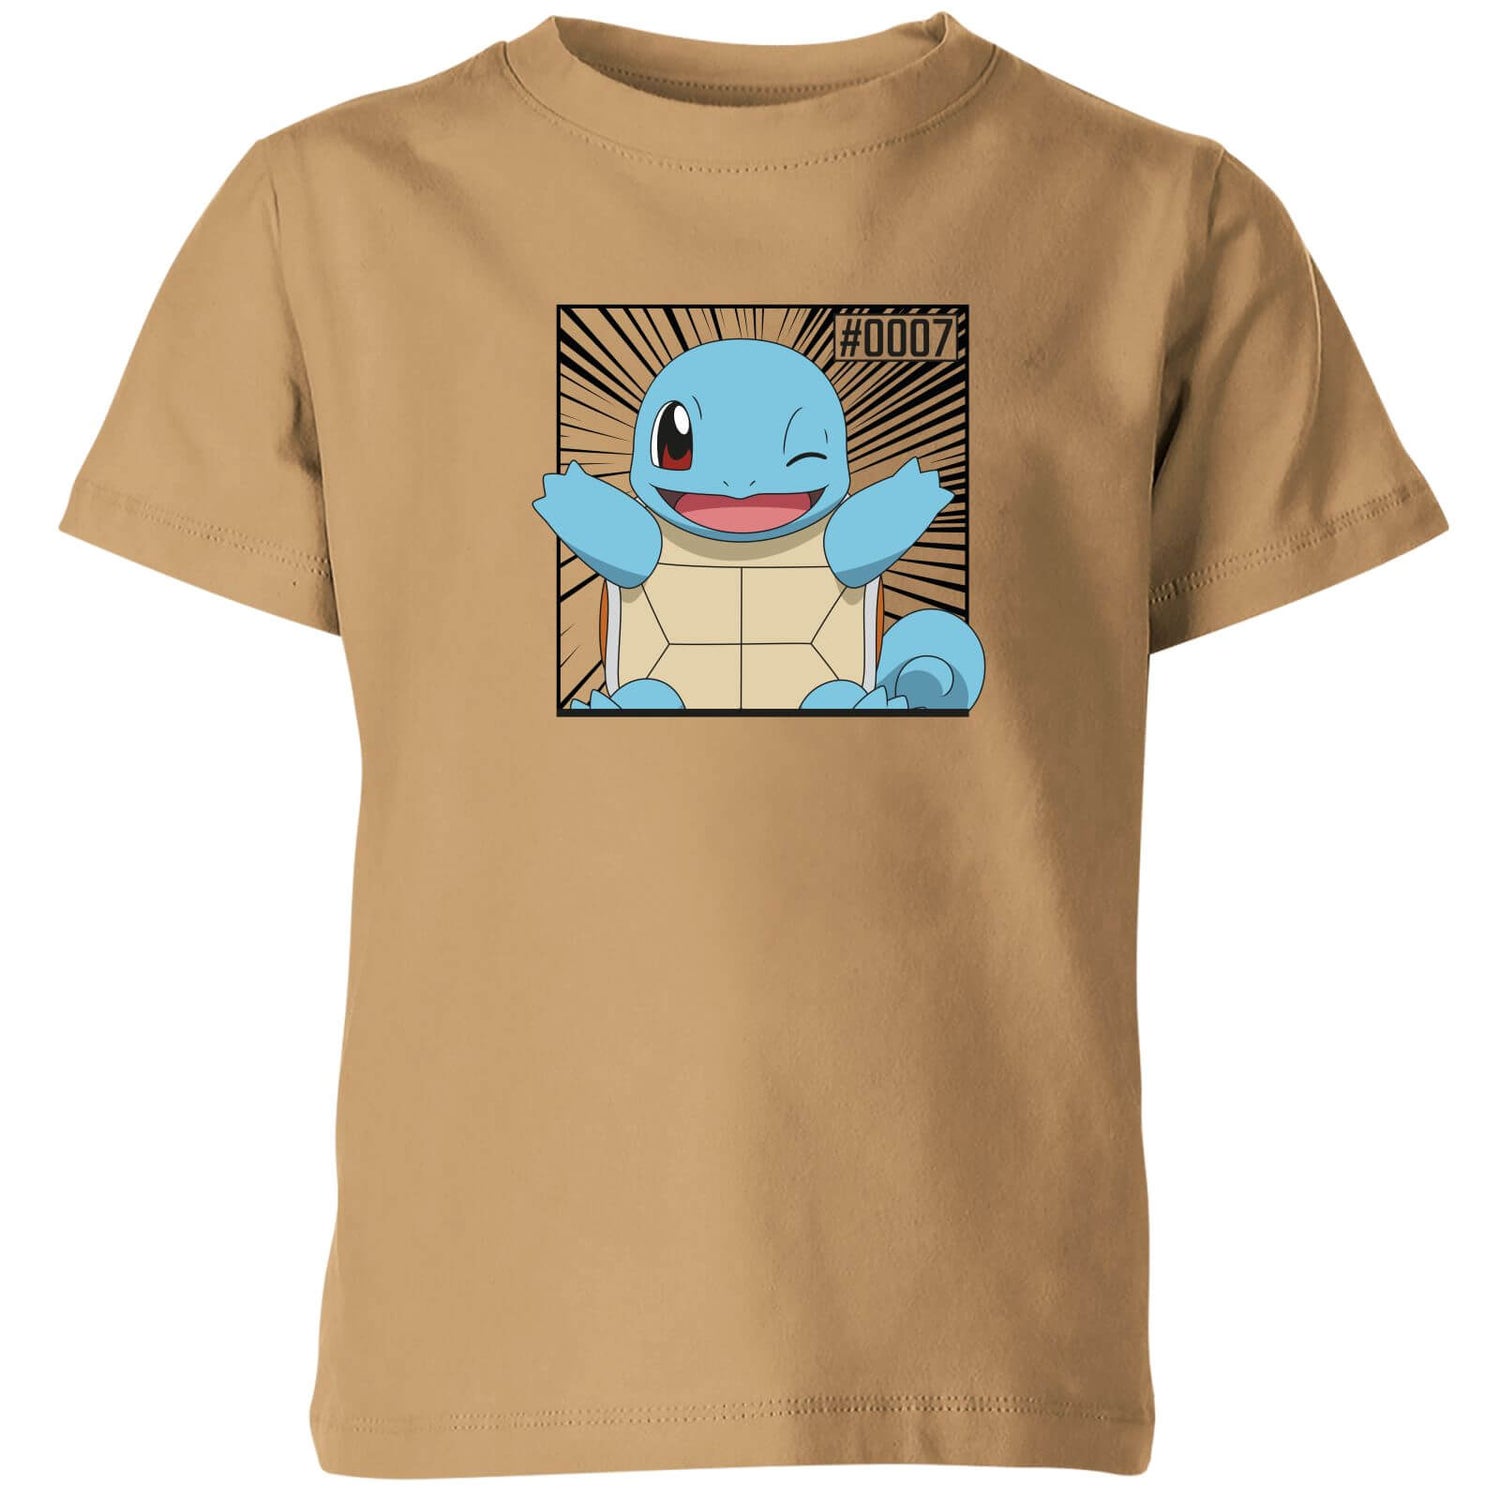 Pokémon Pokédex Squirtle #0007 Kids' T-Shirt - Tan